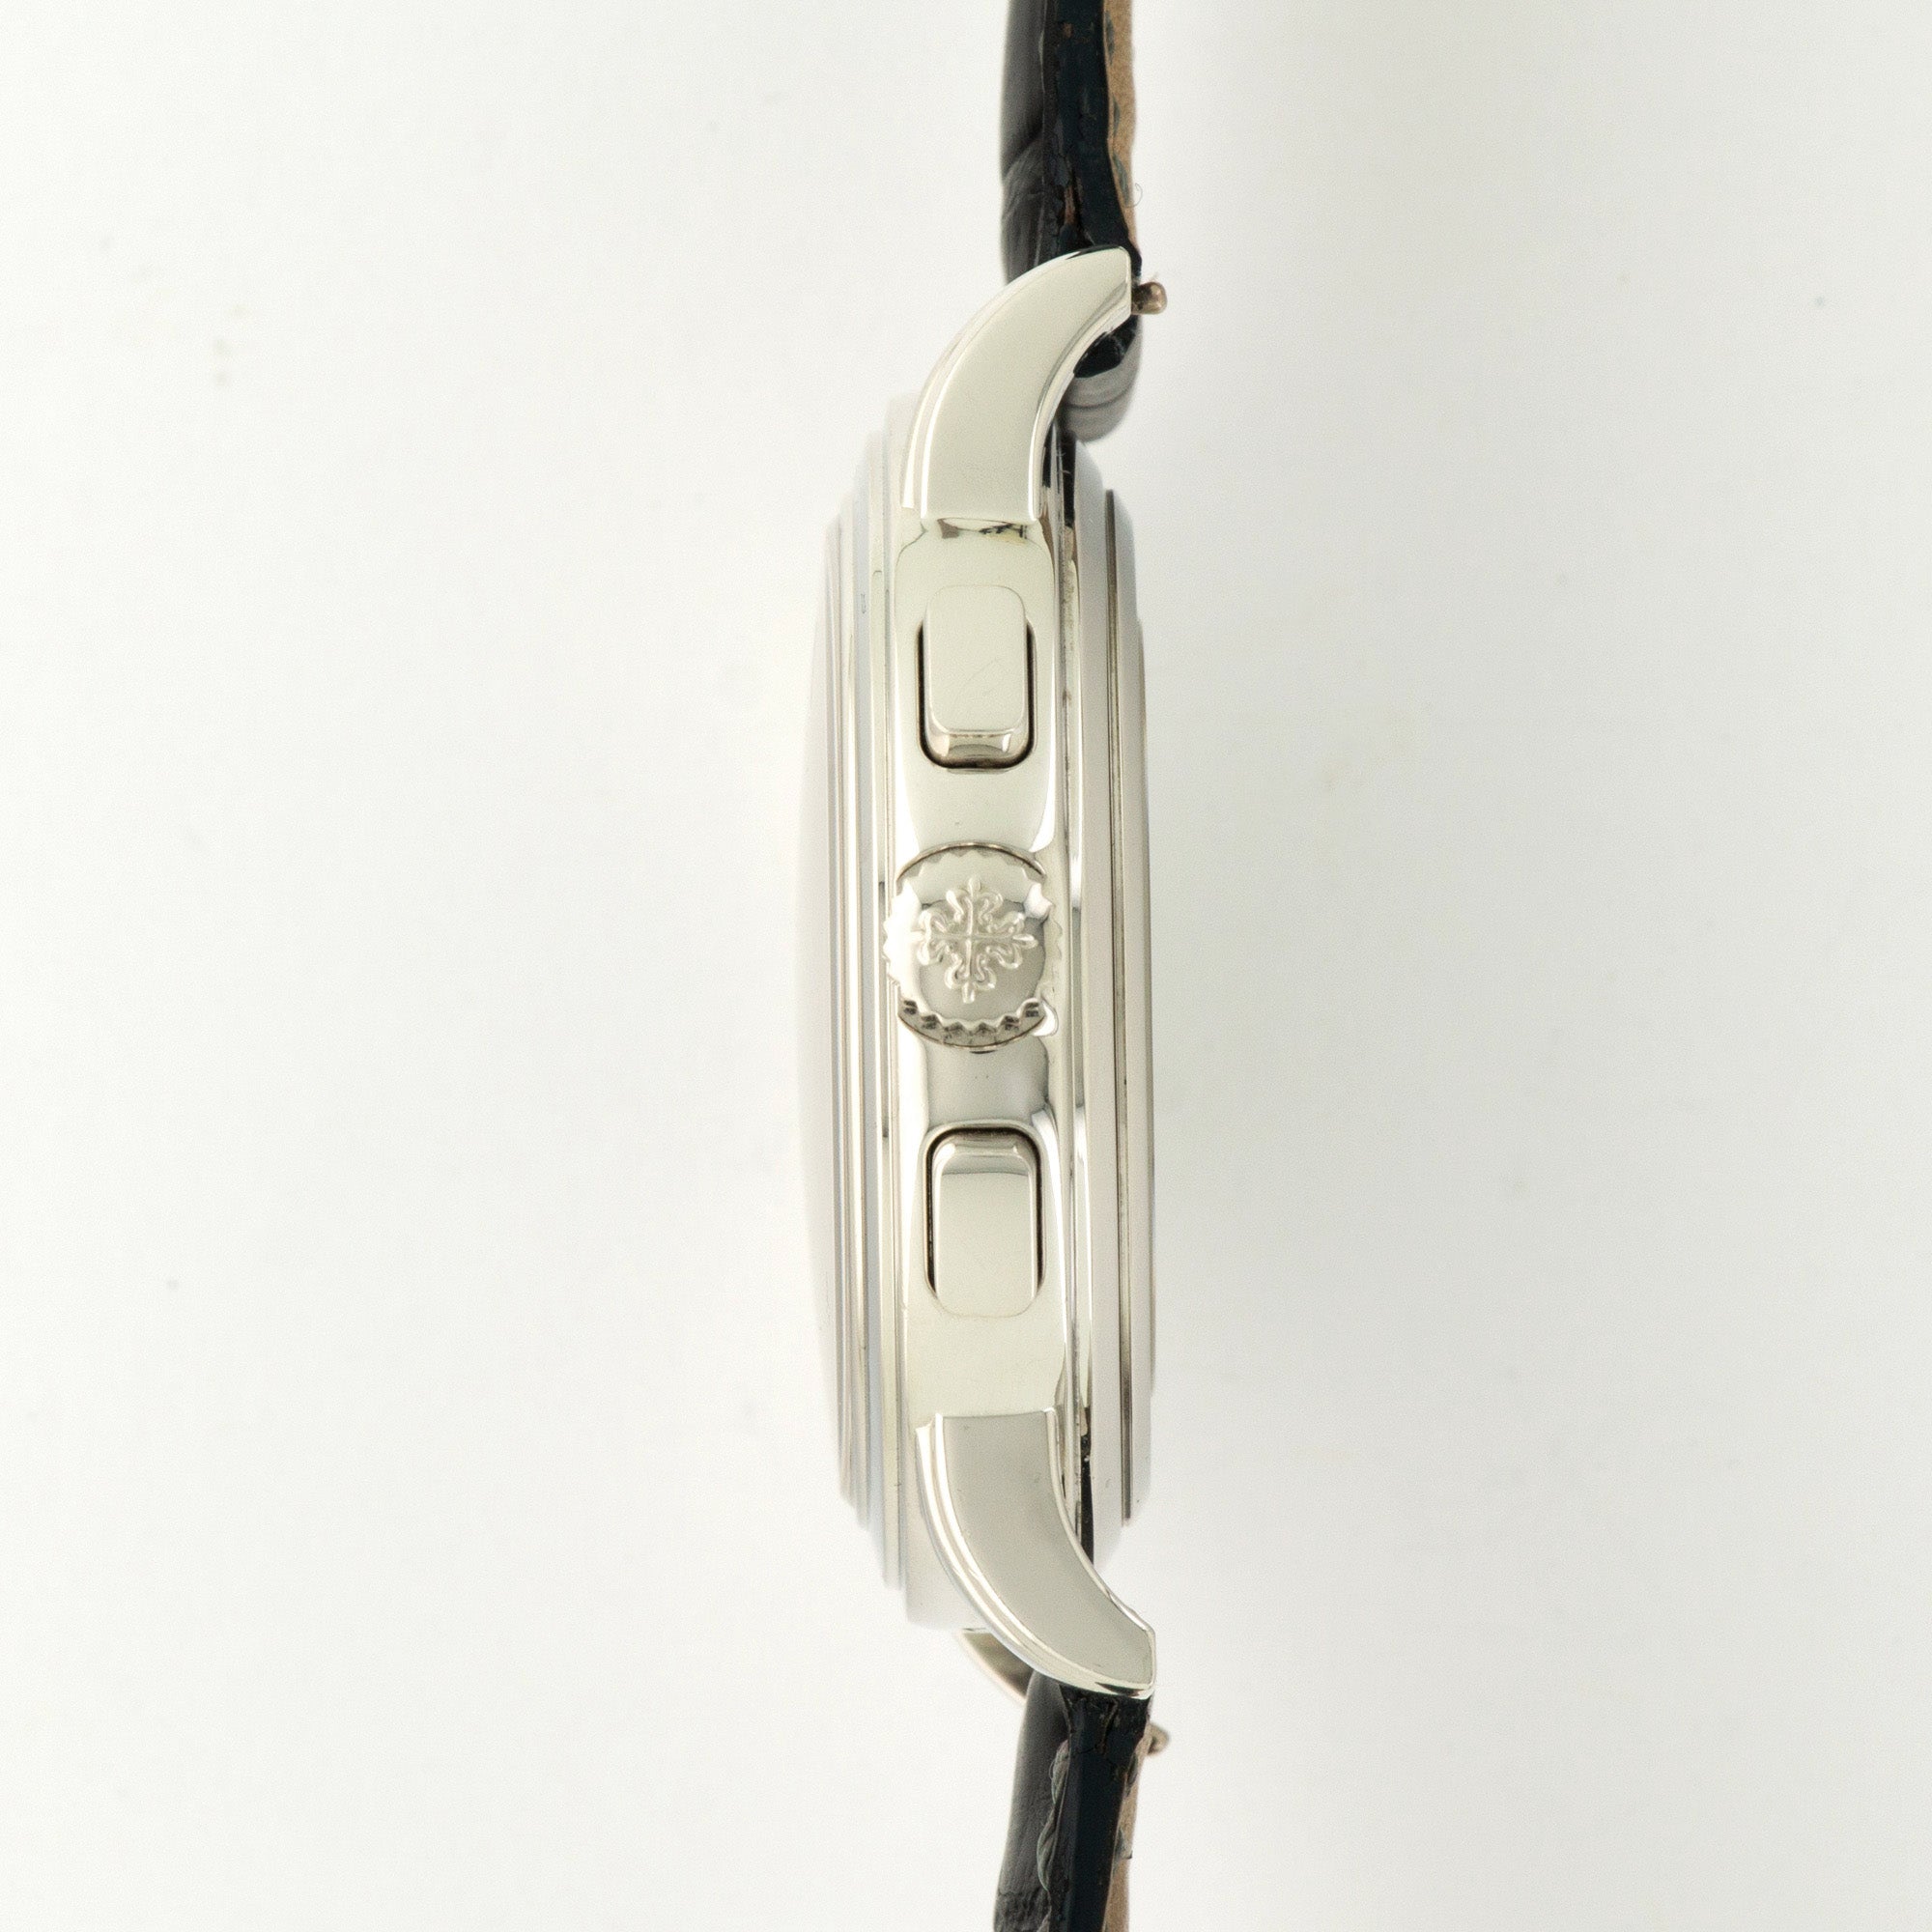 Patek Philippe - Patek Philippe Platinum Chronograph Watch Ref. 5070 - The Keystone Watches